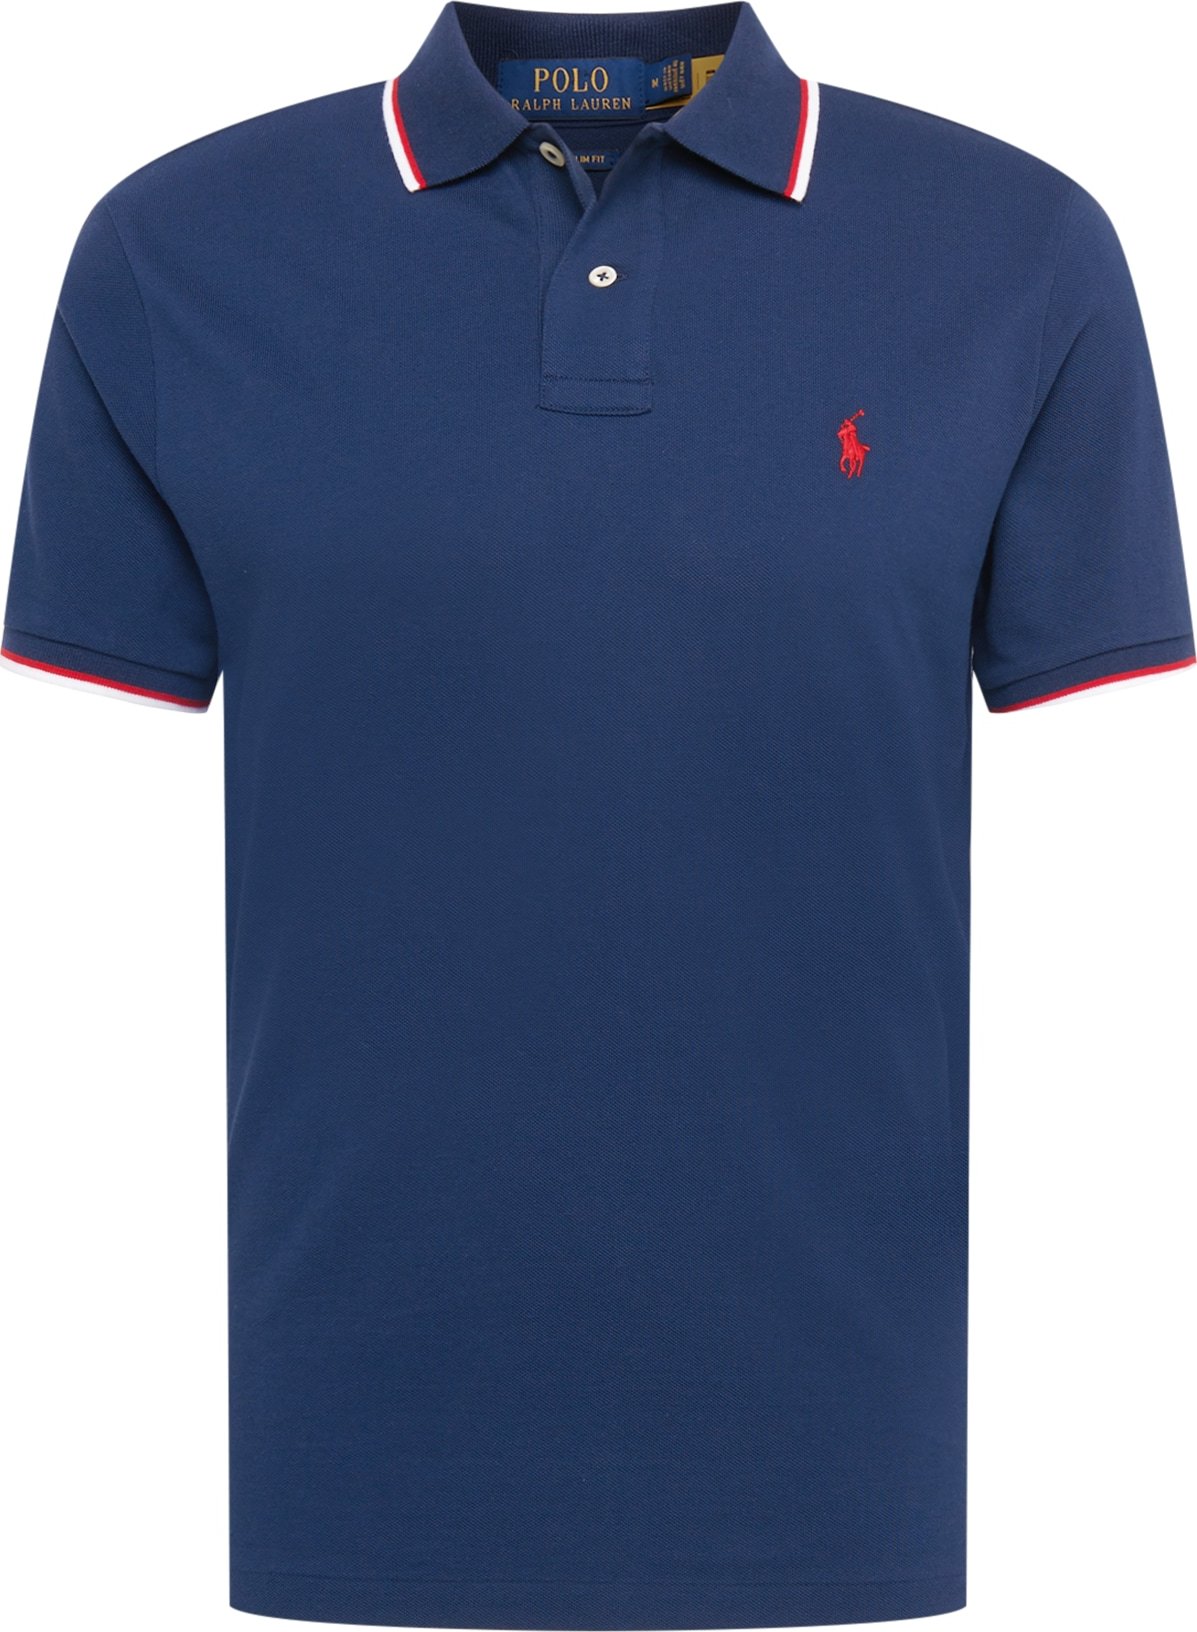 Tričko Polo Ralph Lauren námořnická modř / červená / bílá